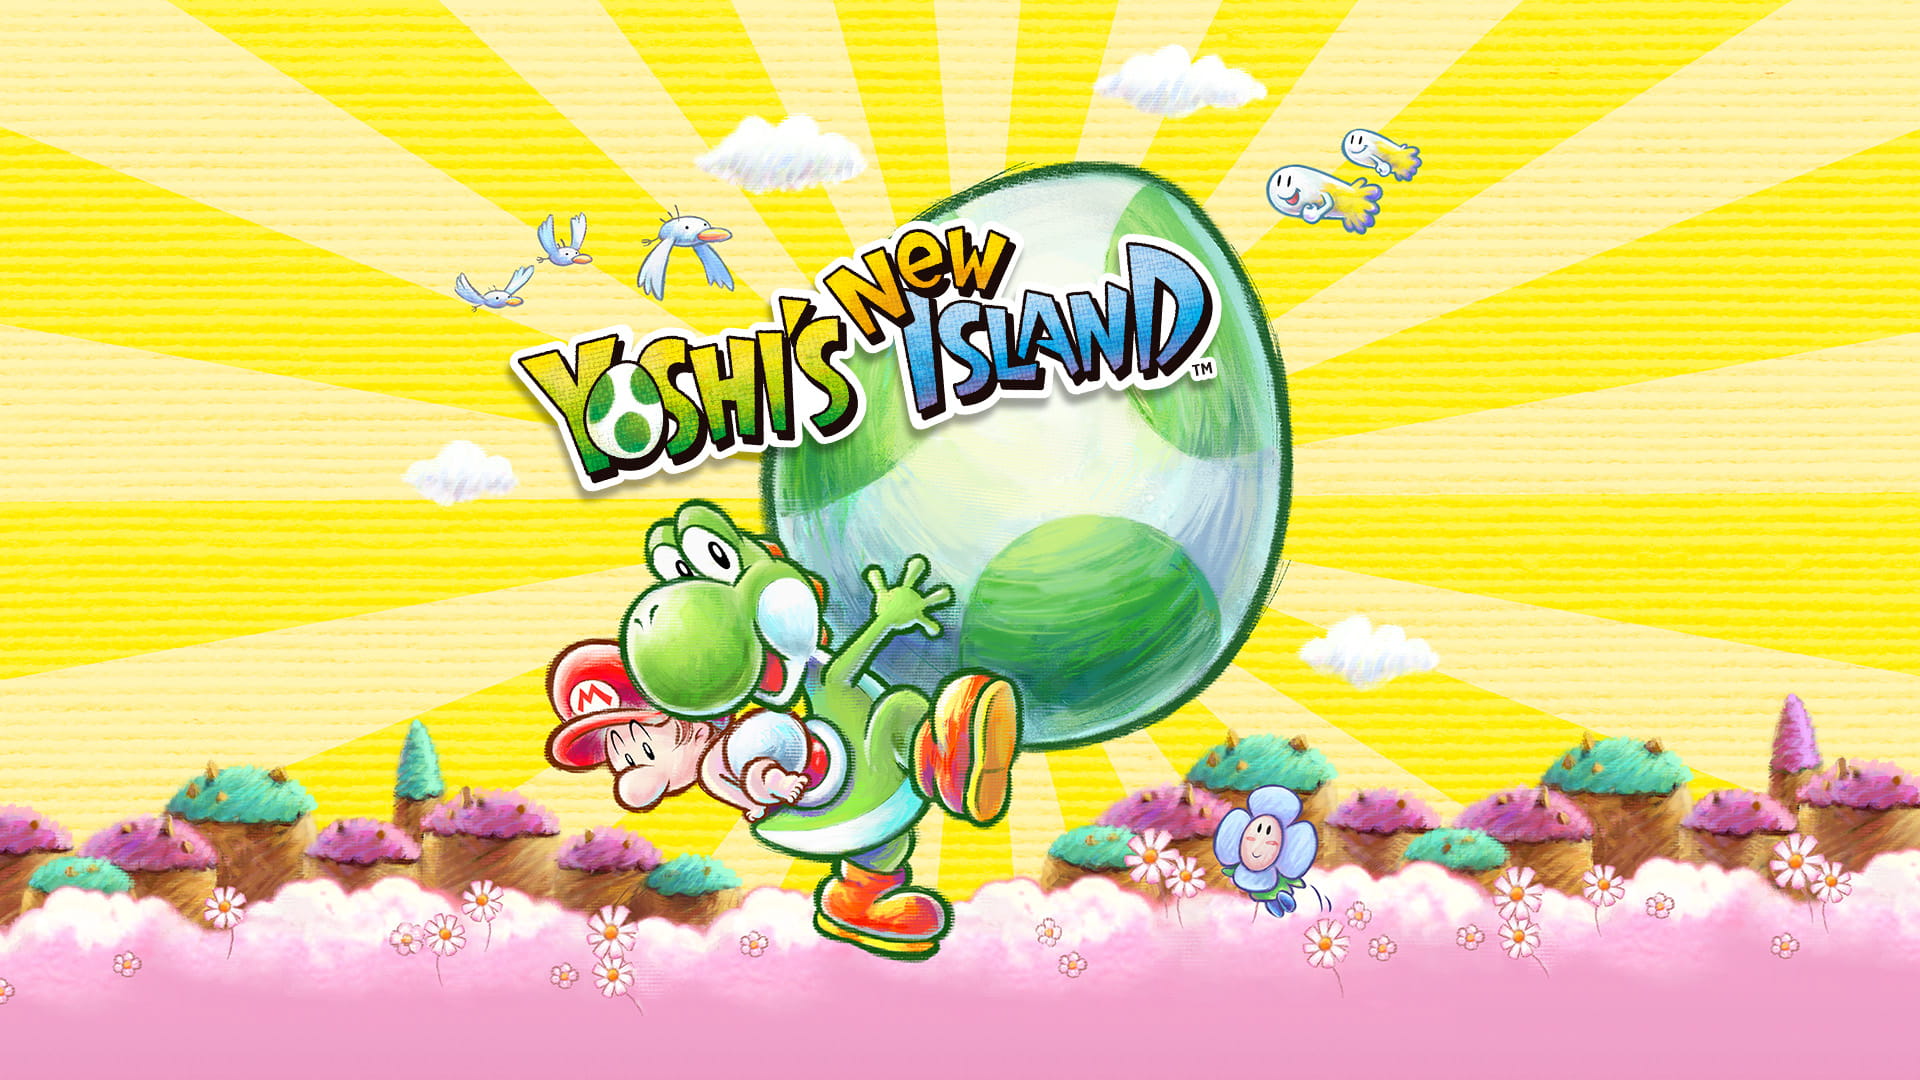 Yoshi's New Island